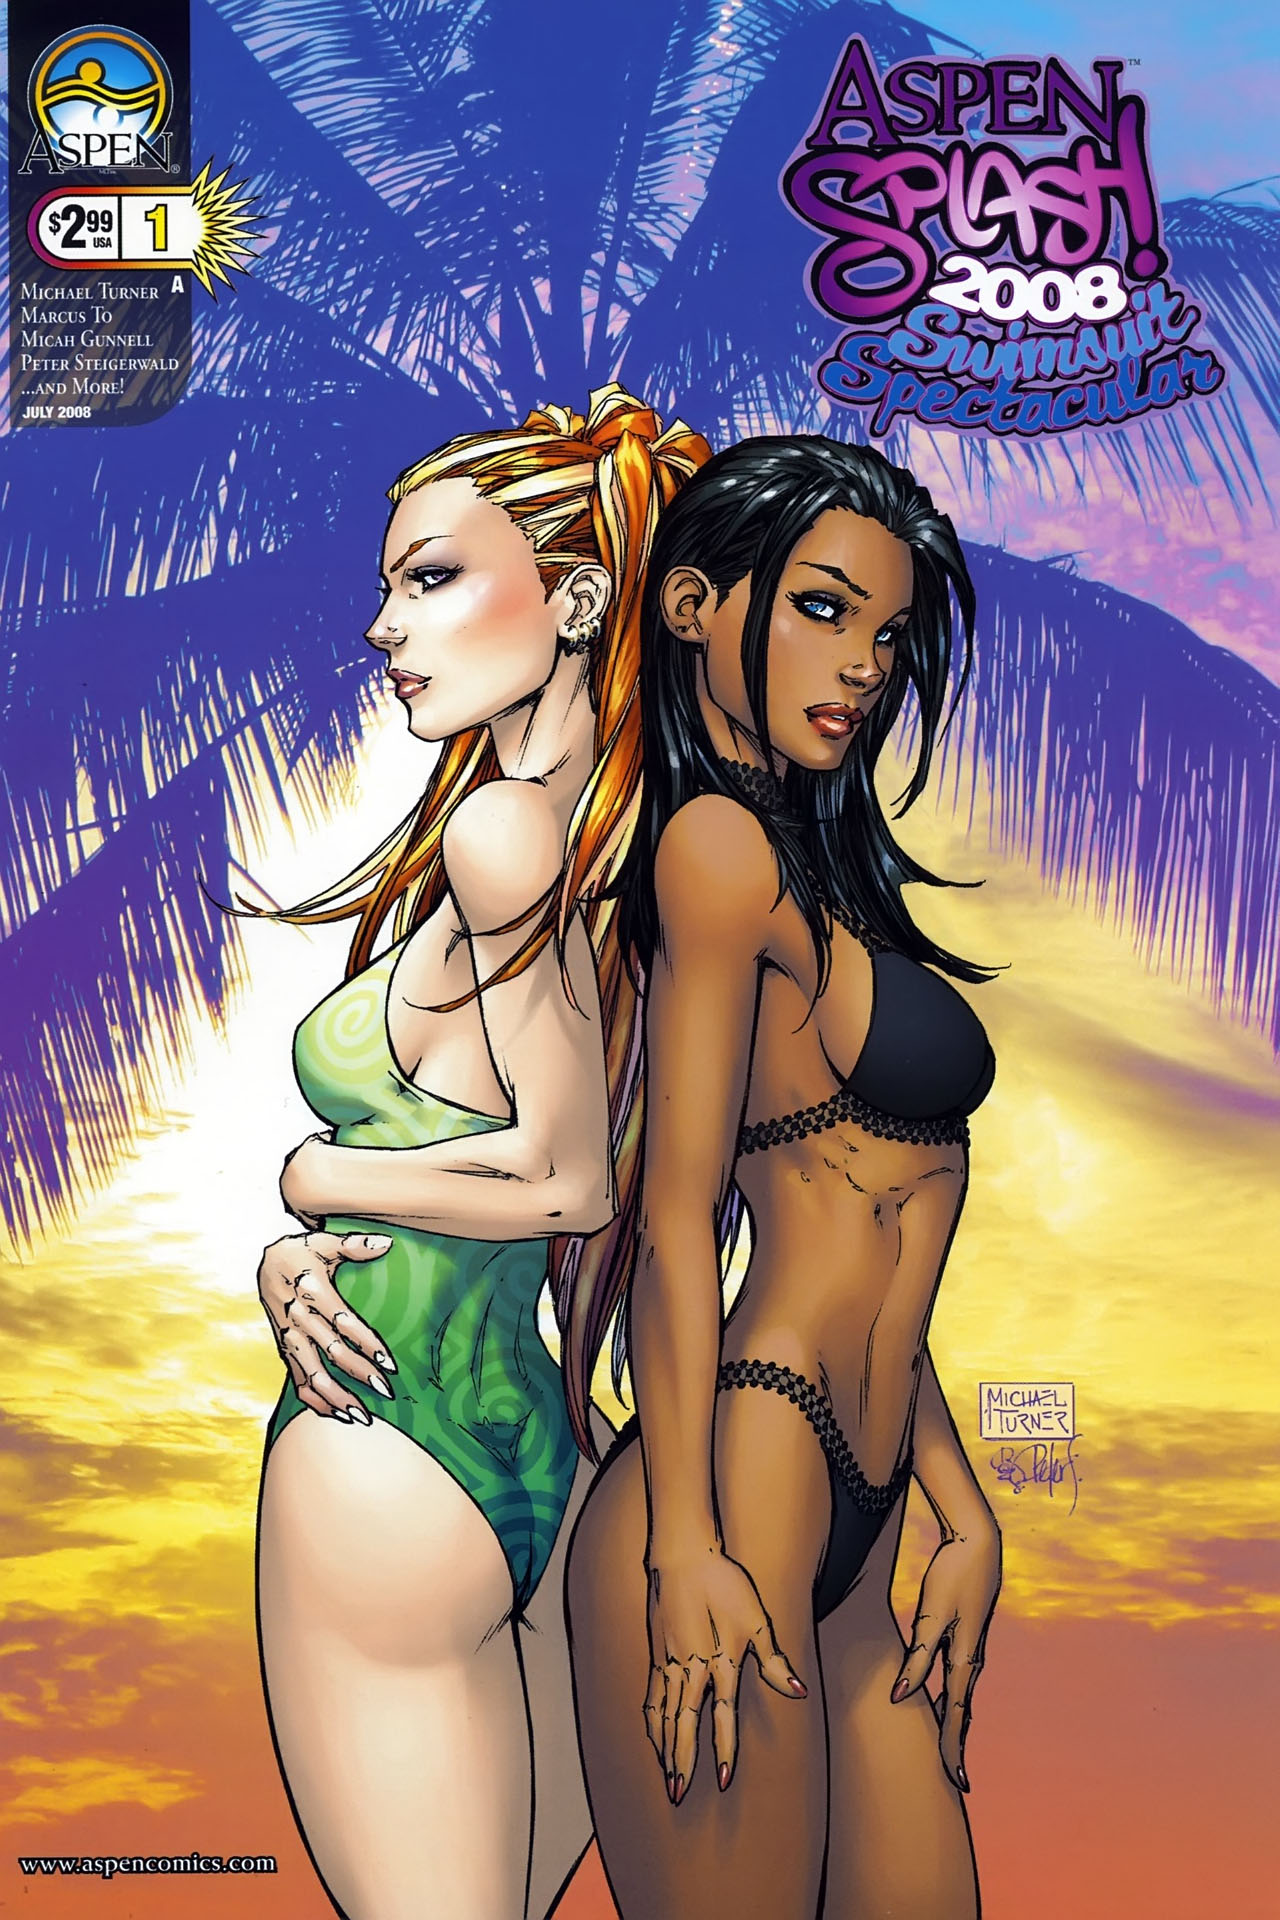 Read online Aspen Splash: Swimsuit Spectacular comic -  Issue # Issue 2008 - 1